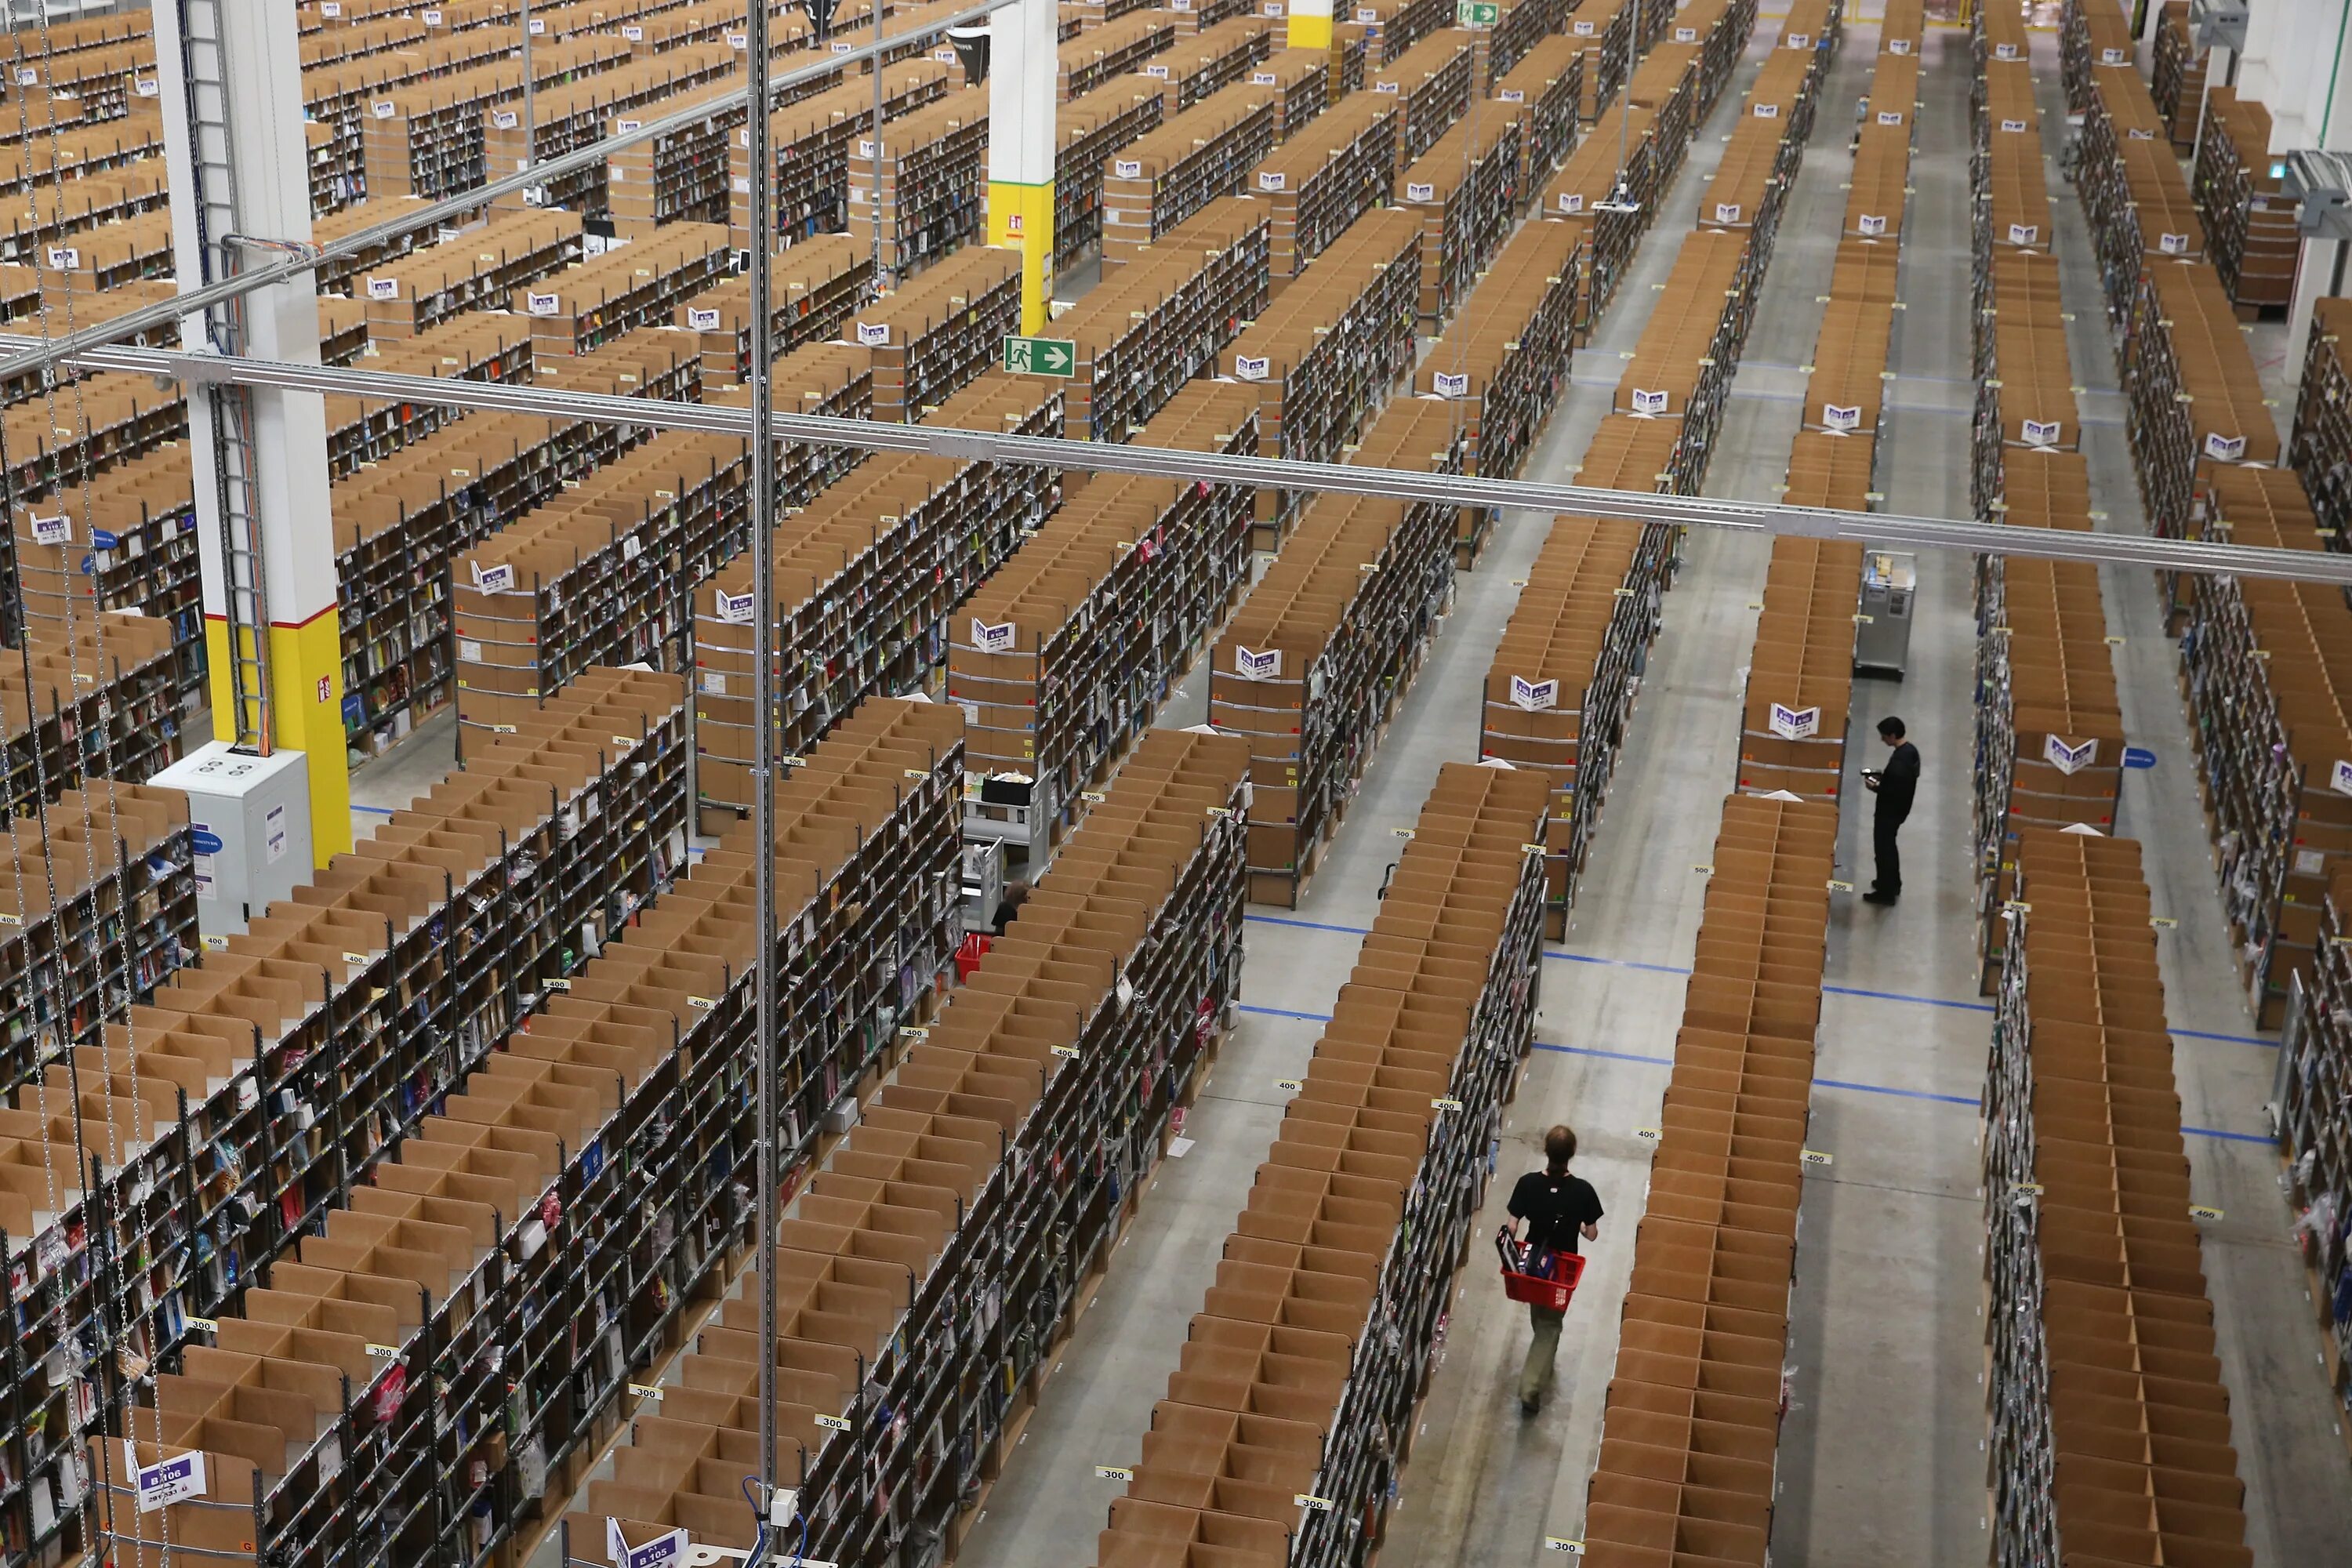 Amazon Storehouse. Склад Амазон. Самый большой склад Amazon. Склад Амазона в Америке. Amazon работает